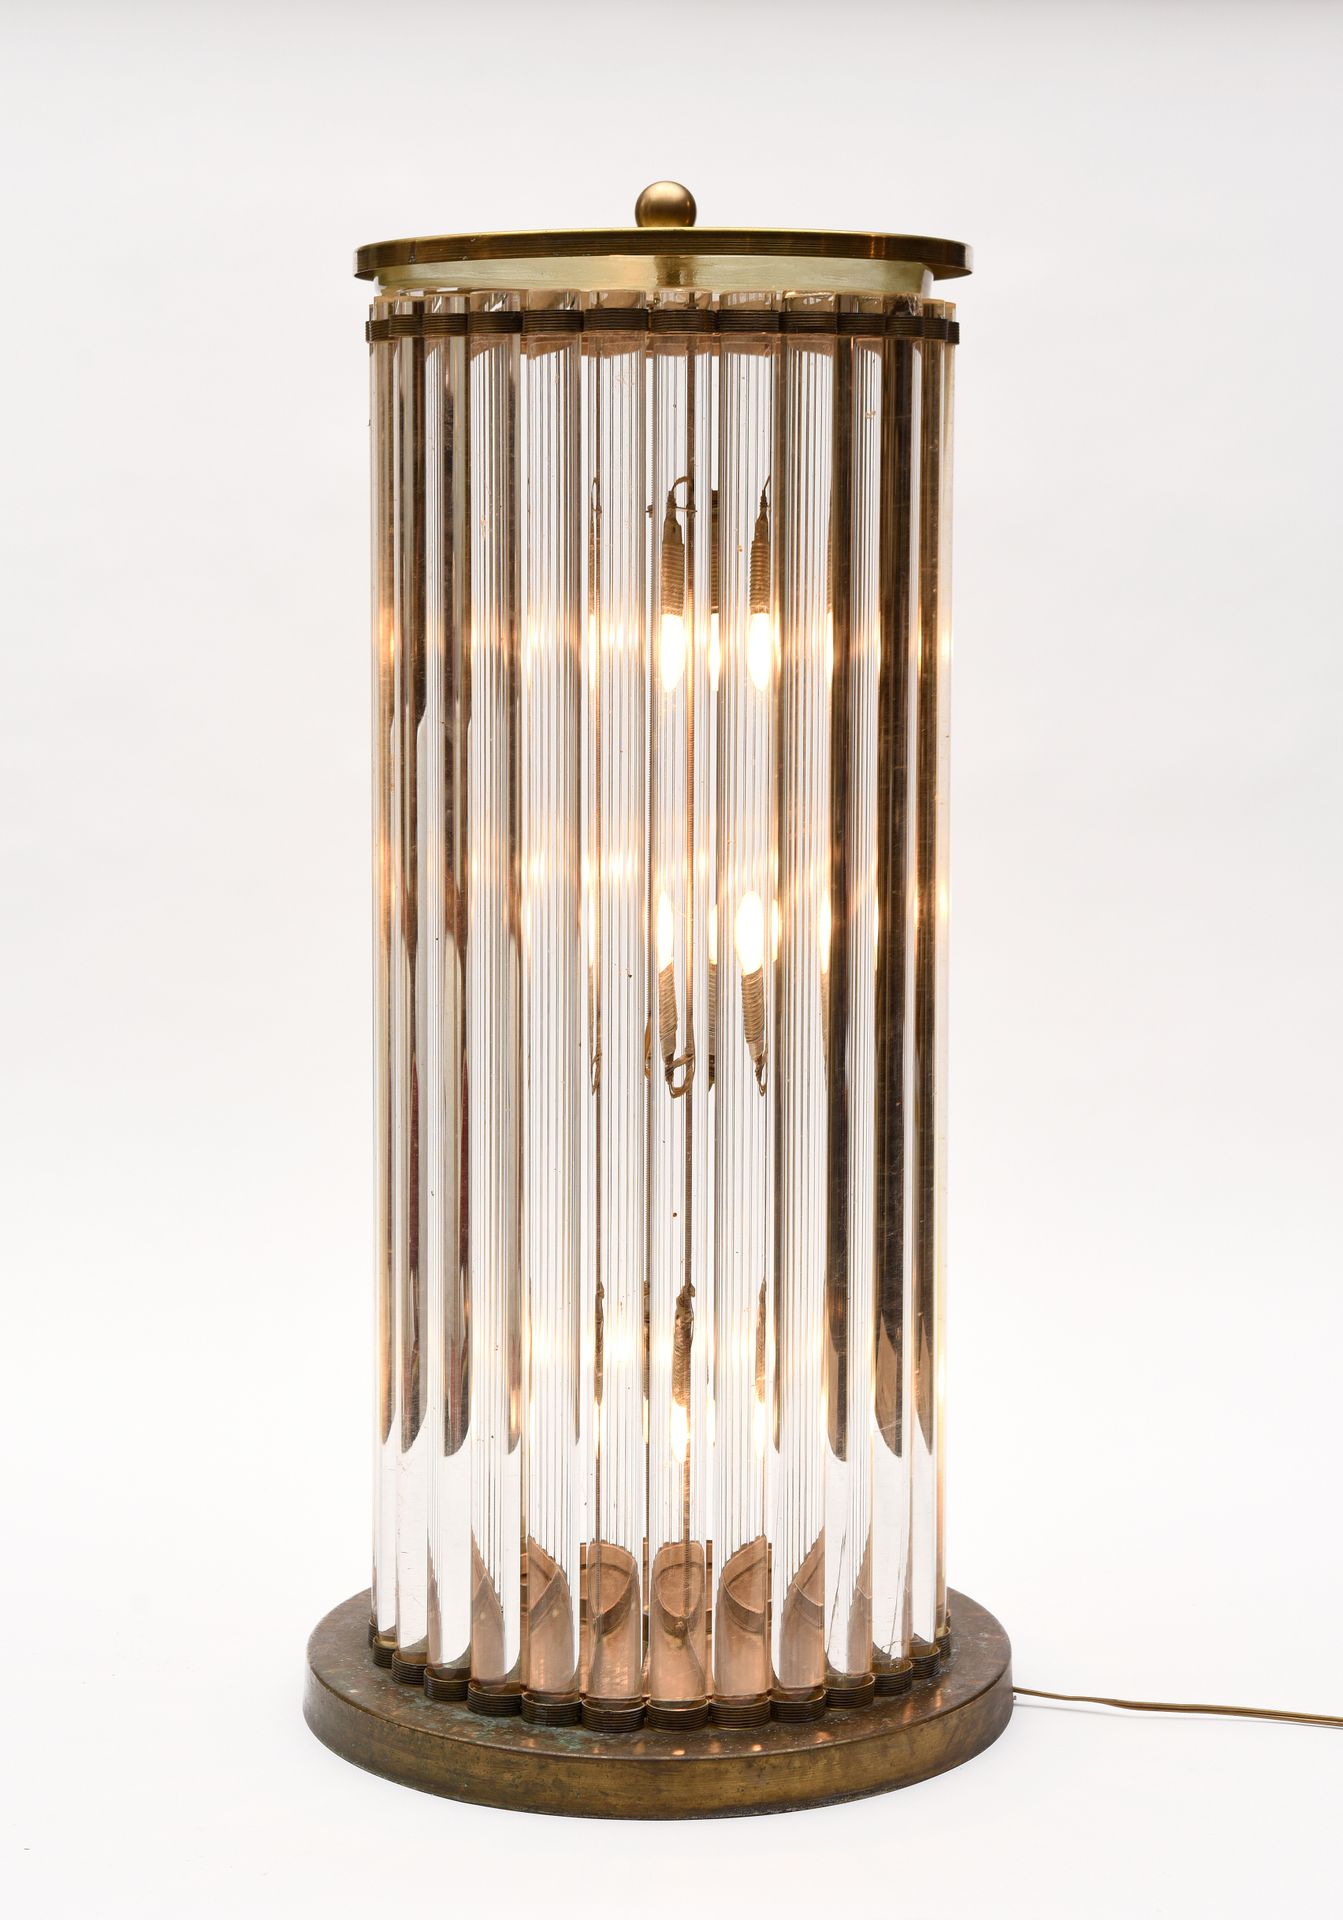 Null 穆拉诺

重要的圆柱形灯

由有凹槽的玻璃棒制成。

高83厘米